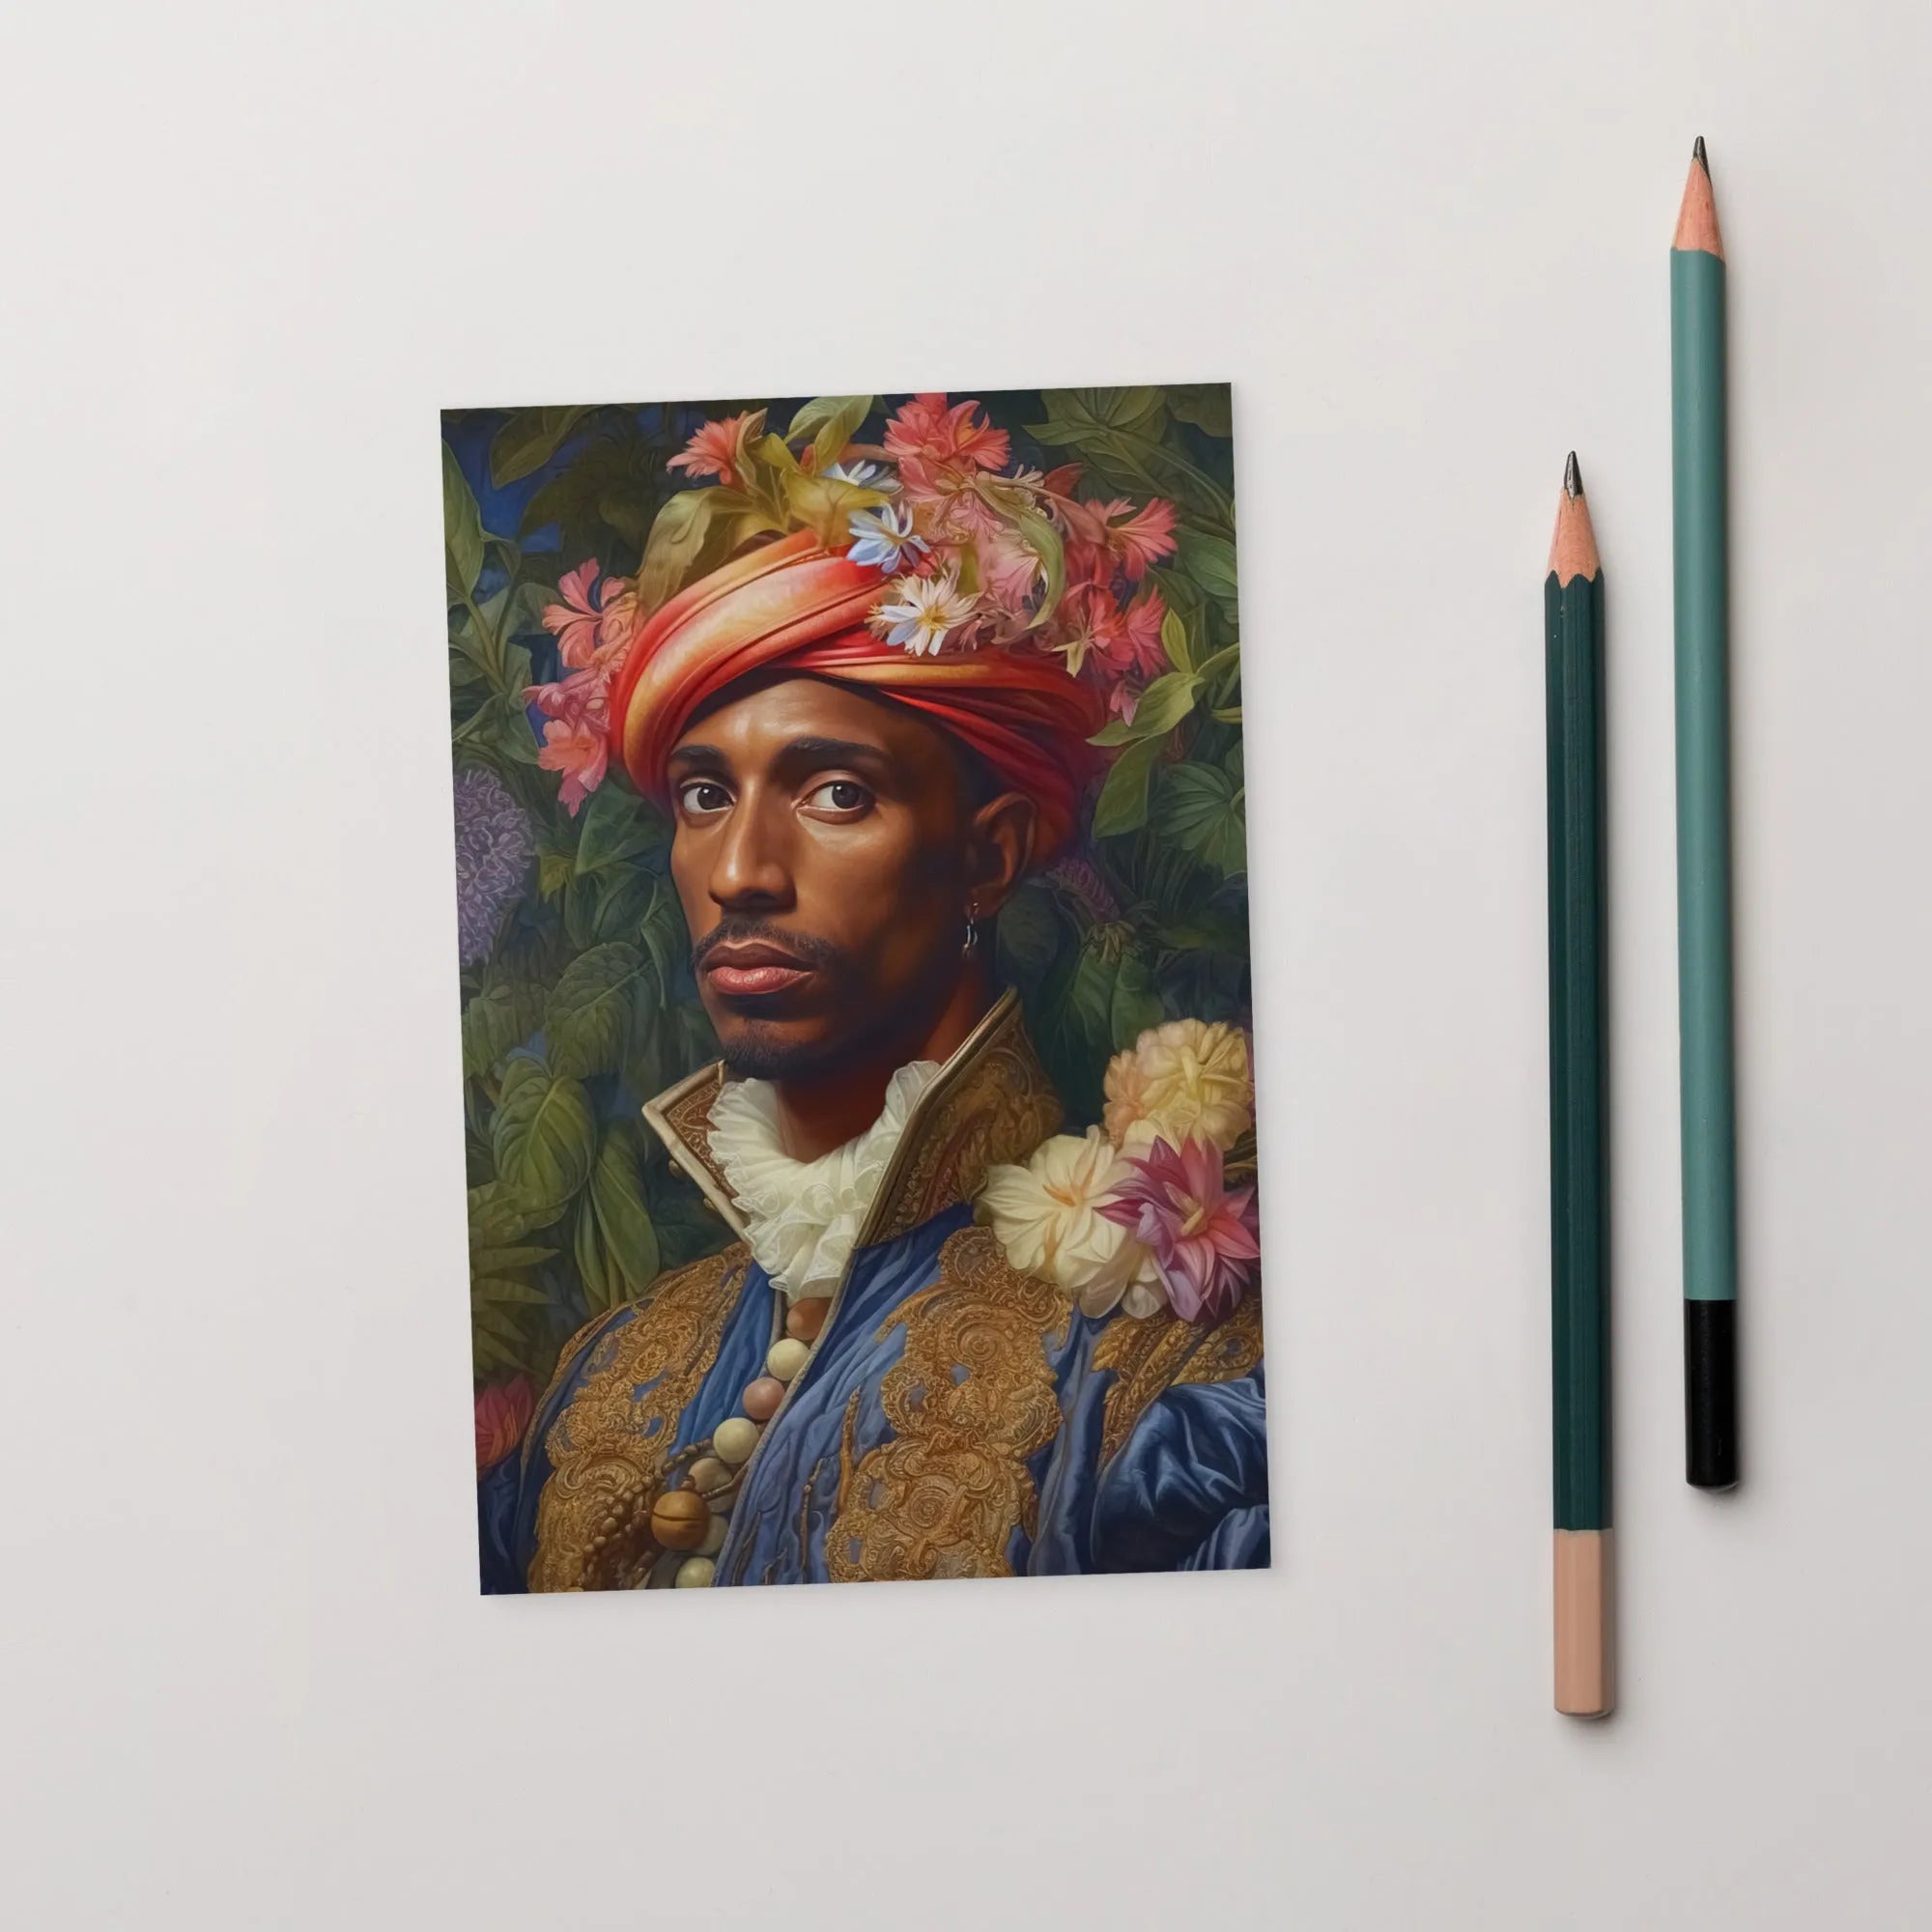 Prince Isaiah - Afroamerican Gay Black Royalty Queerart - 4’x6’ - Posters Prints & Visual Artwork - Aesthetic Art